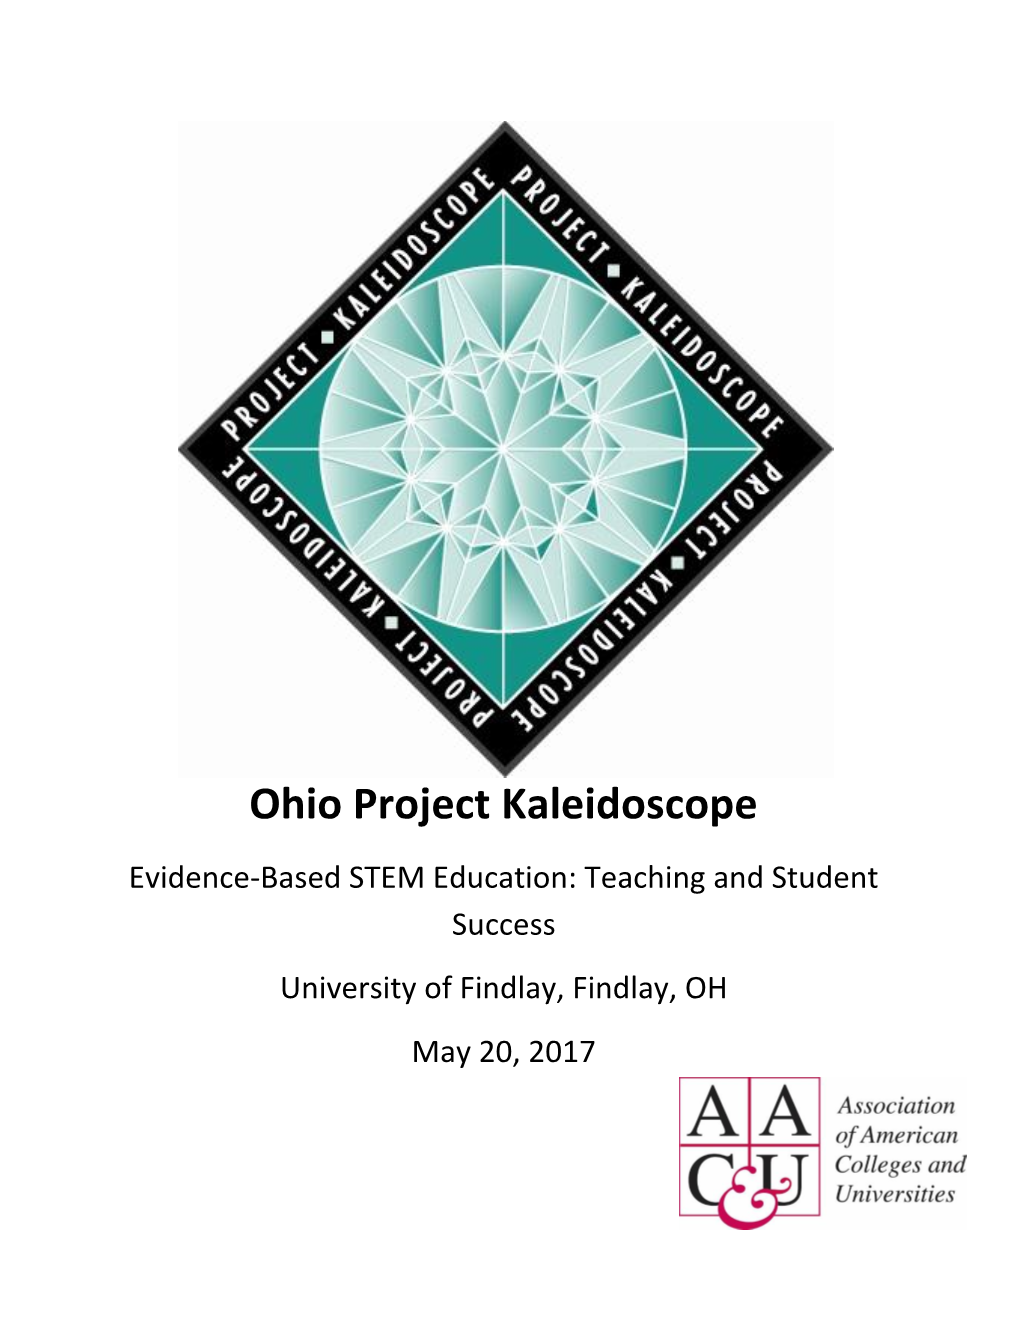 Ohio Project Kaleidoscope Evidence-Based STEM Education: Teaching and Student Success University of Findlay, Findlay, OH May 20, 2017